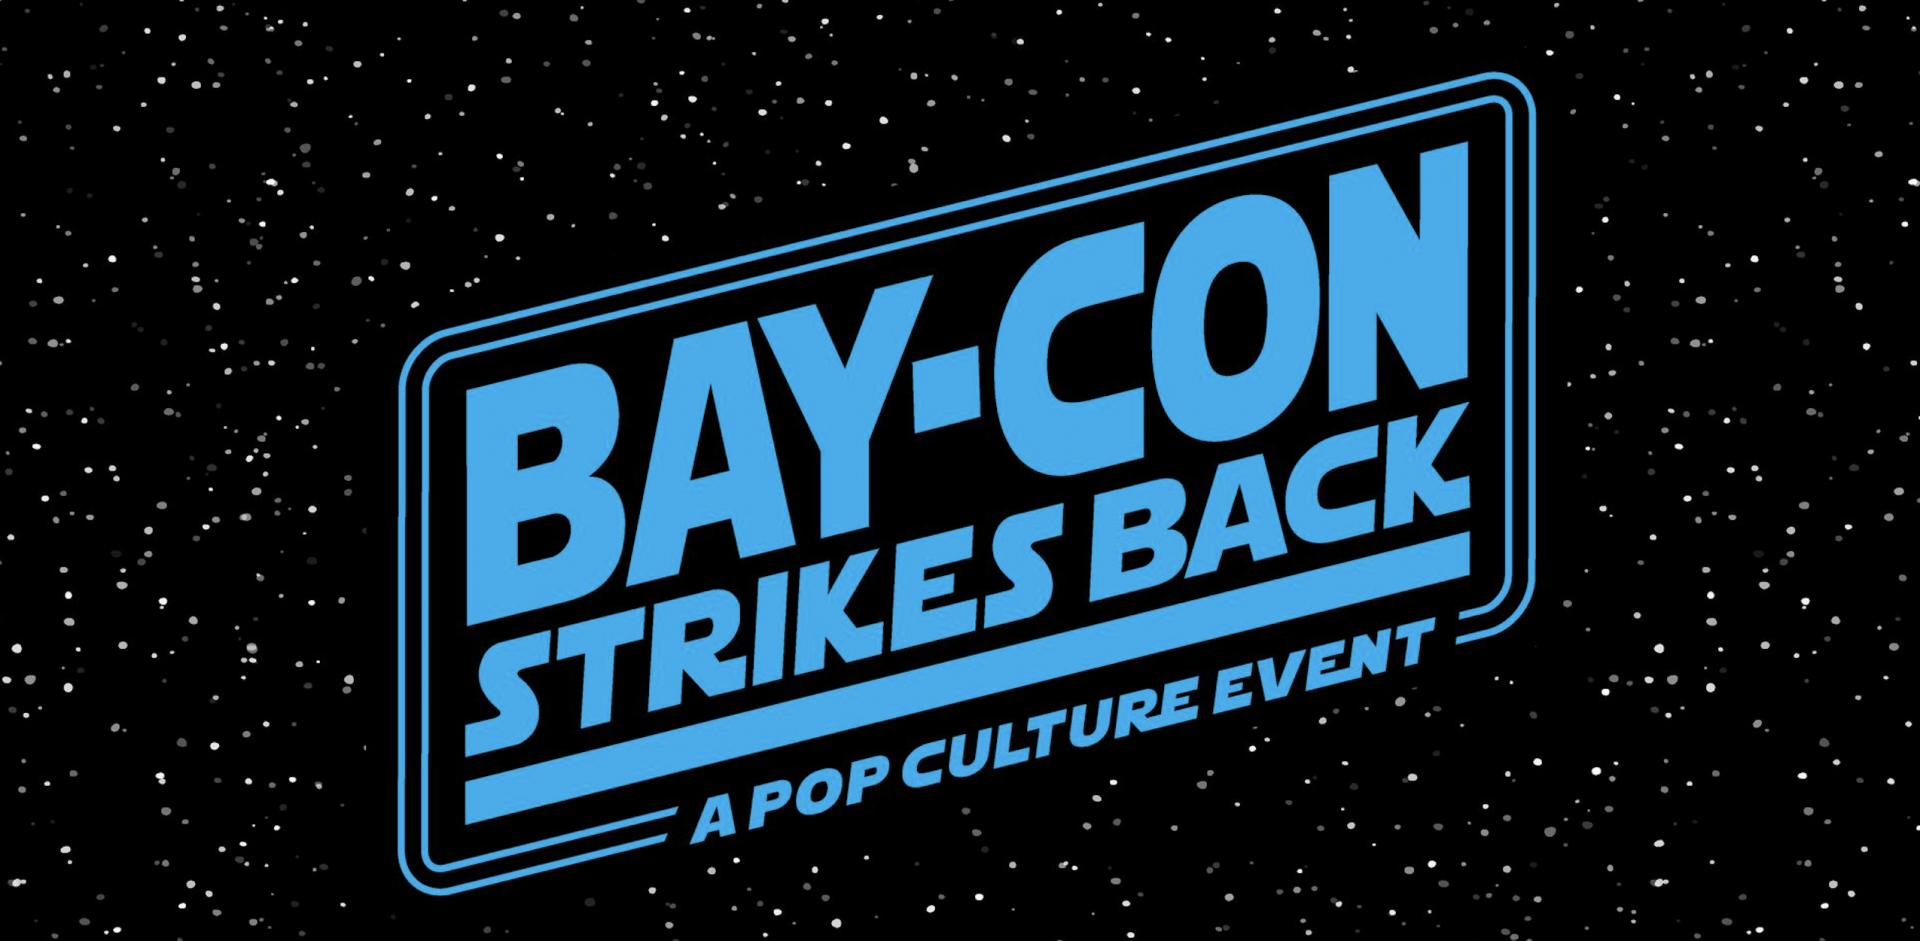 Bay-Con Strikes Back